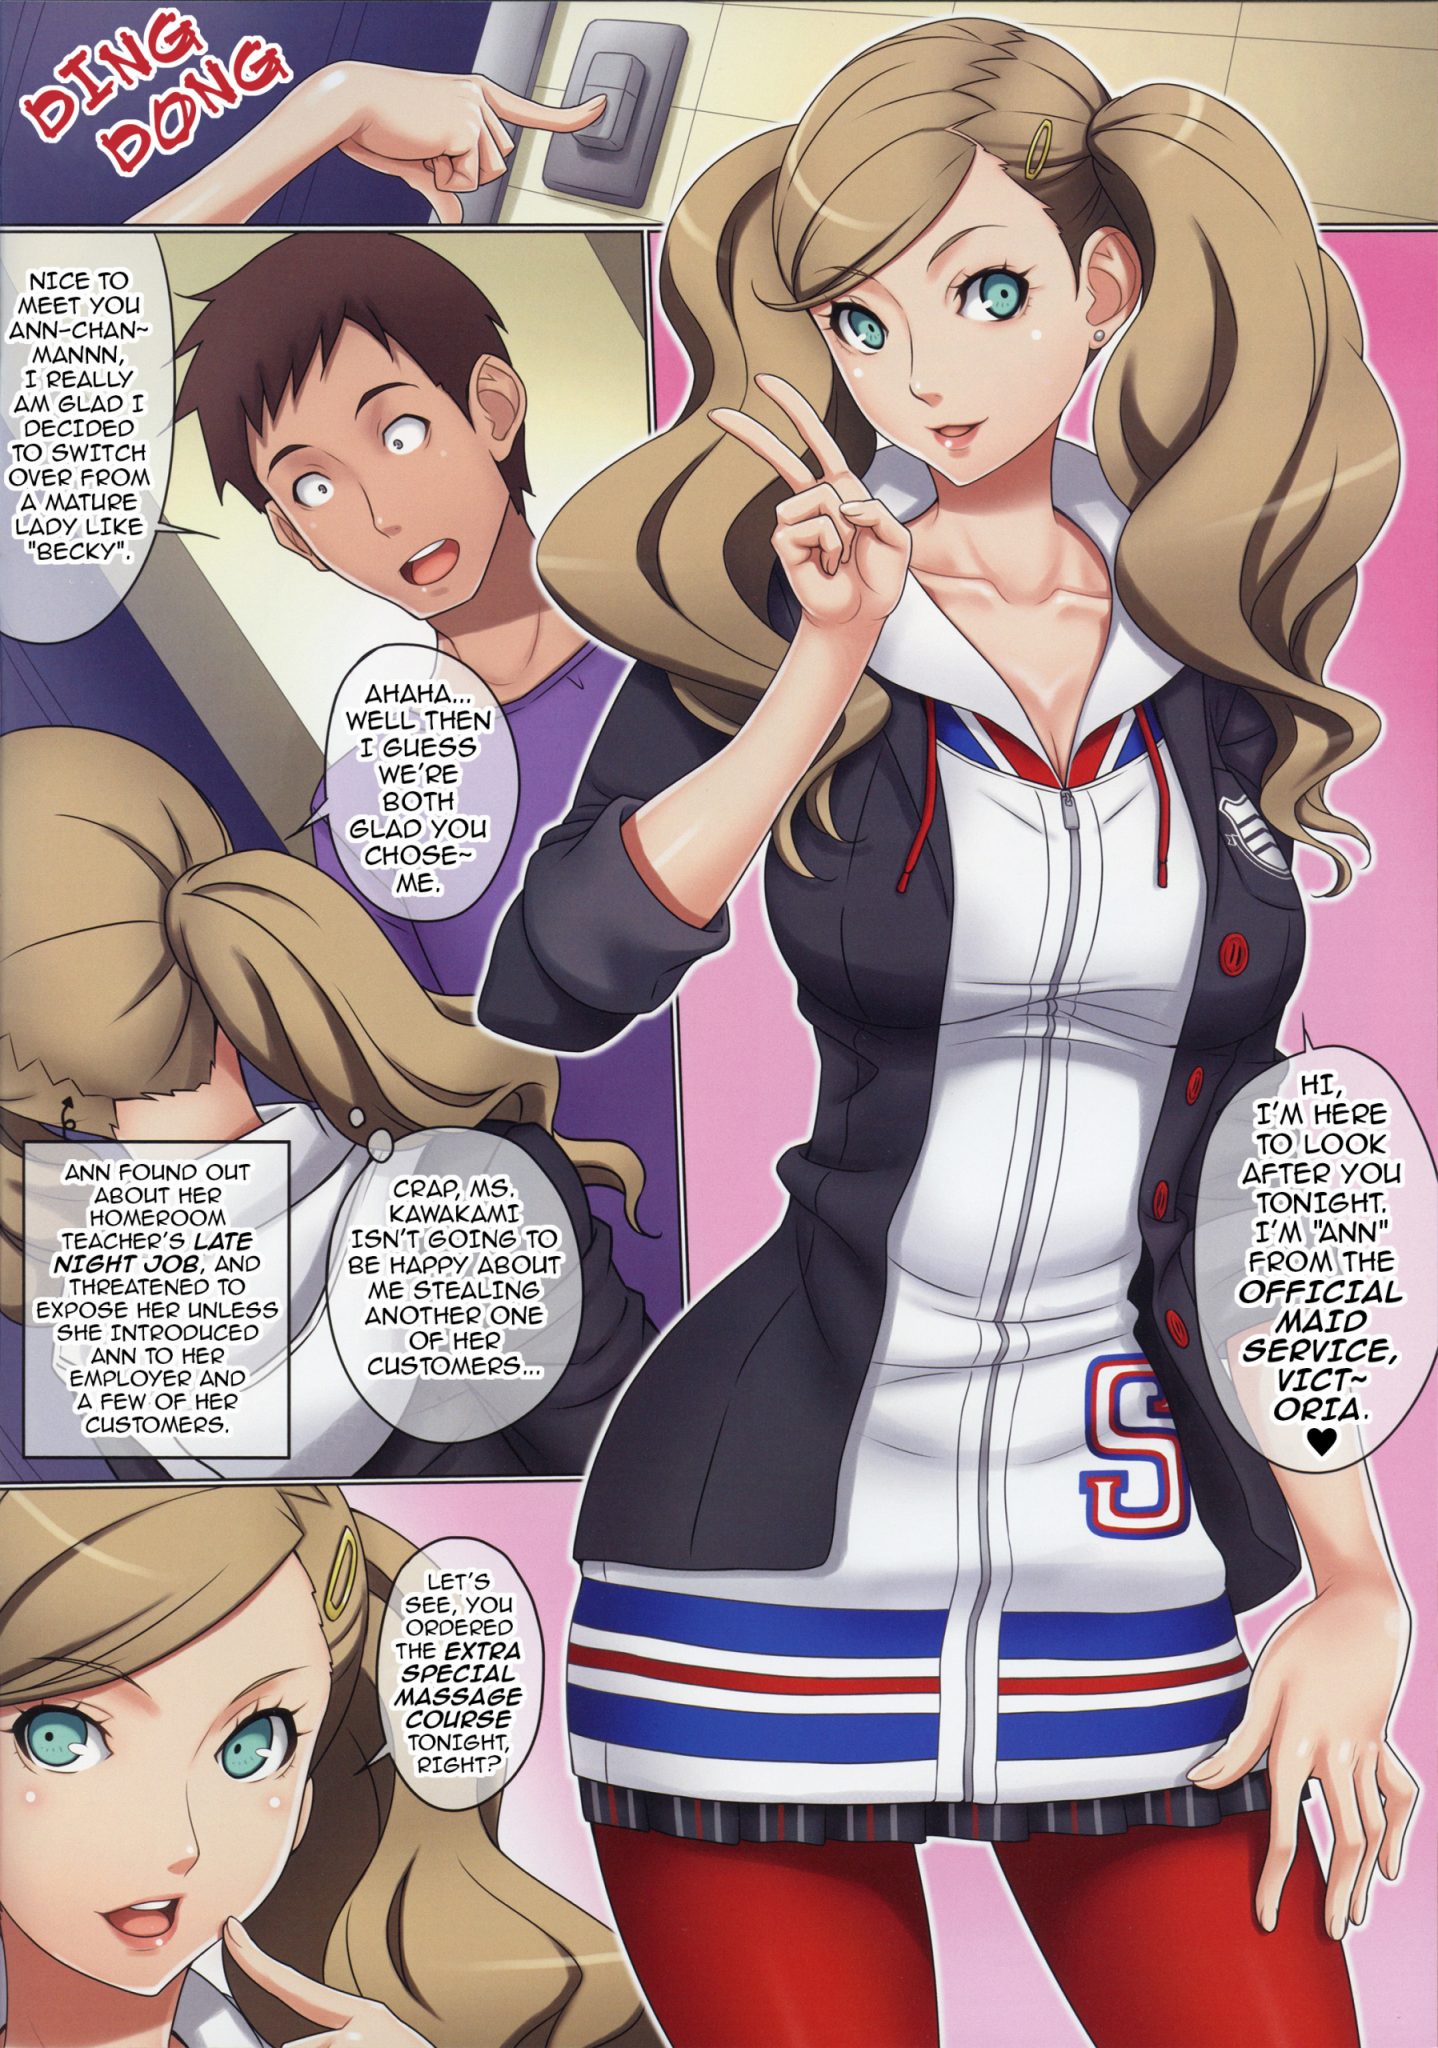 Hentai Anime Books - Gegera Standard â€“ School Girl Viewing Party | Top Hentai Gallery